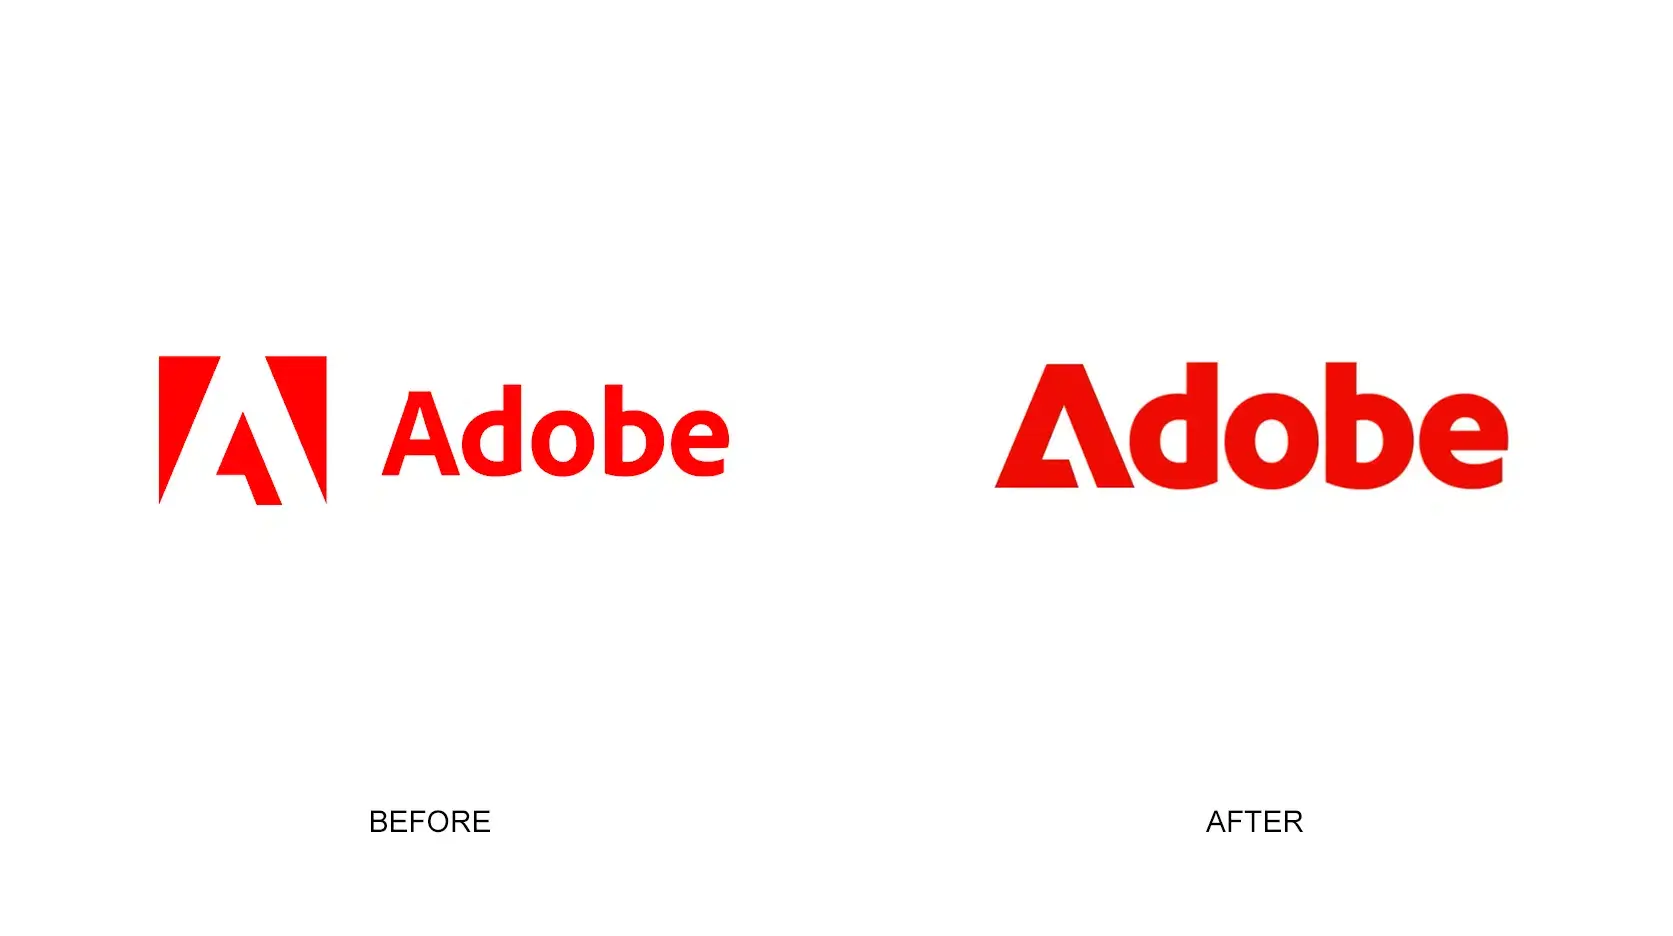 Adobe Express: Democratizing Design with AI-Powered Mobile App